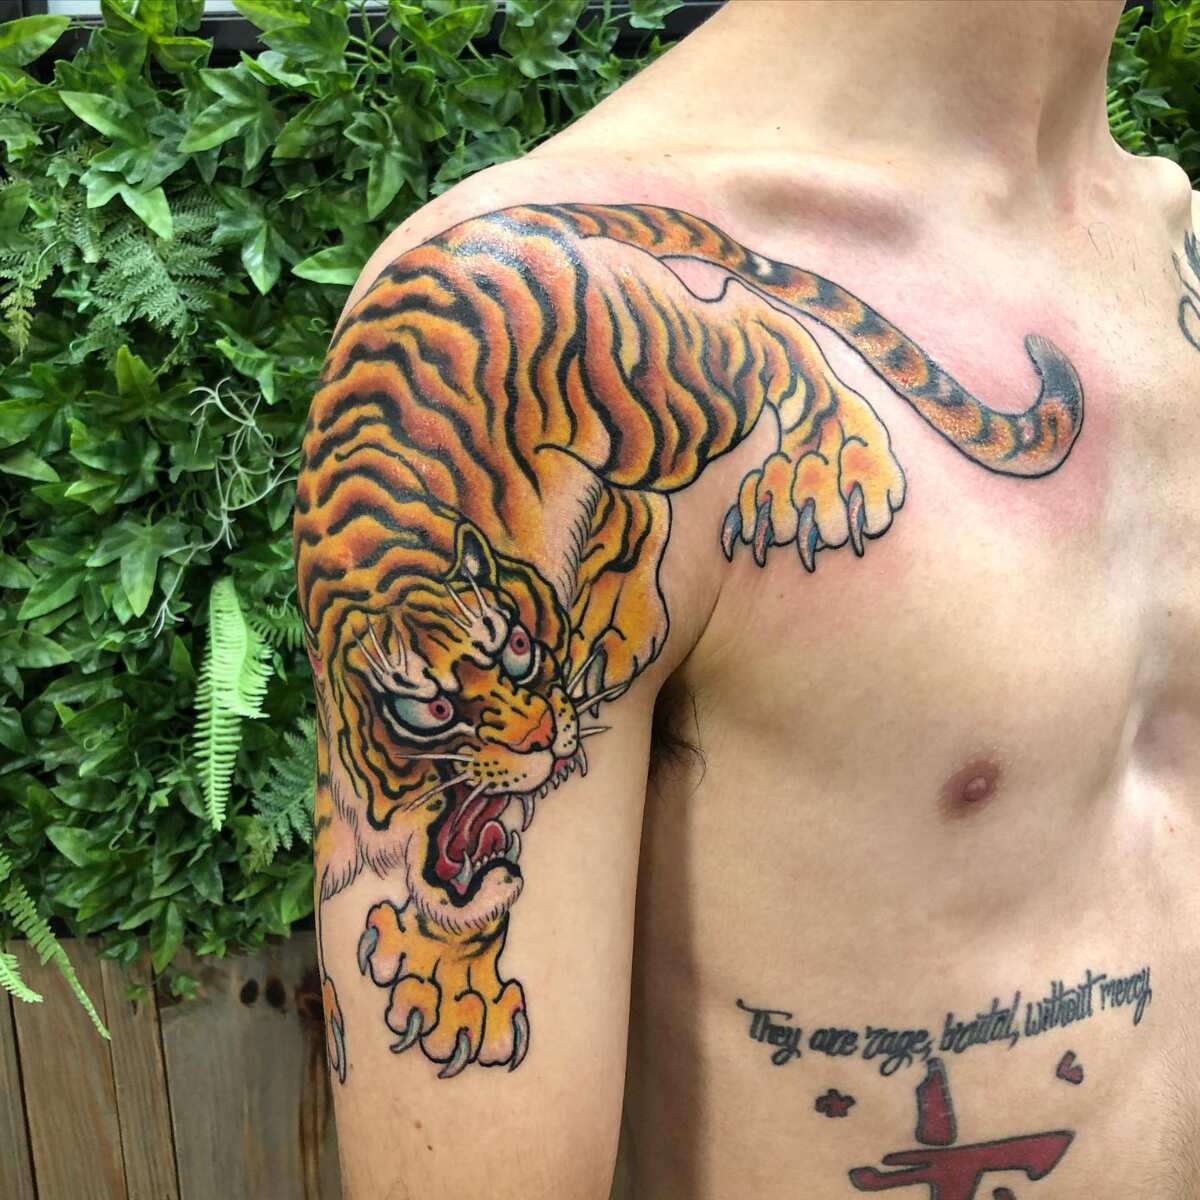 Tiger tattoo images on Favimcom